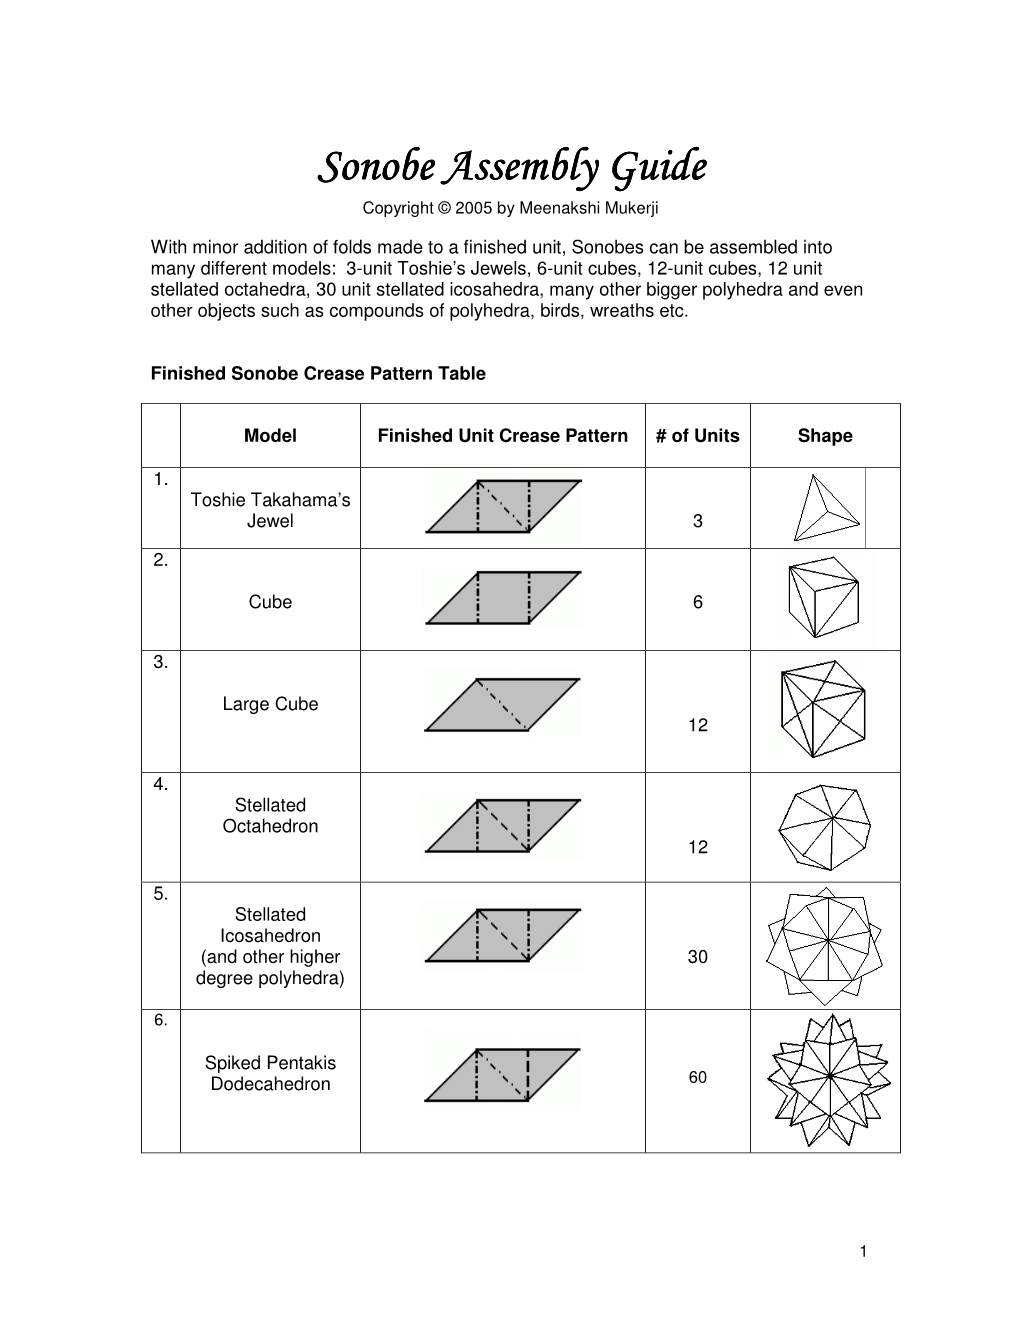 Sonobe Assembly Guide Copyright © 2005 by Meenakshi Mukerji